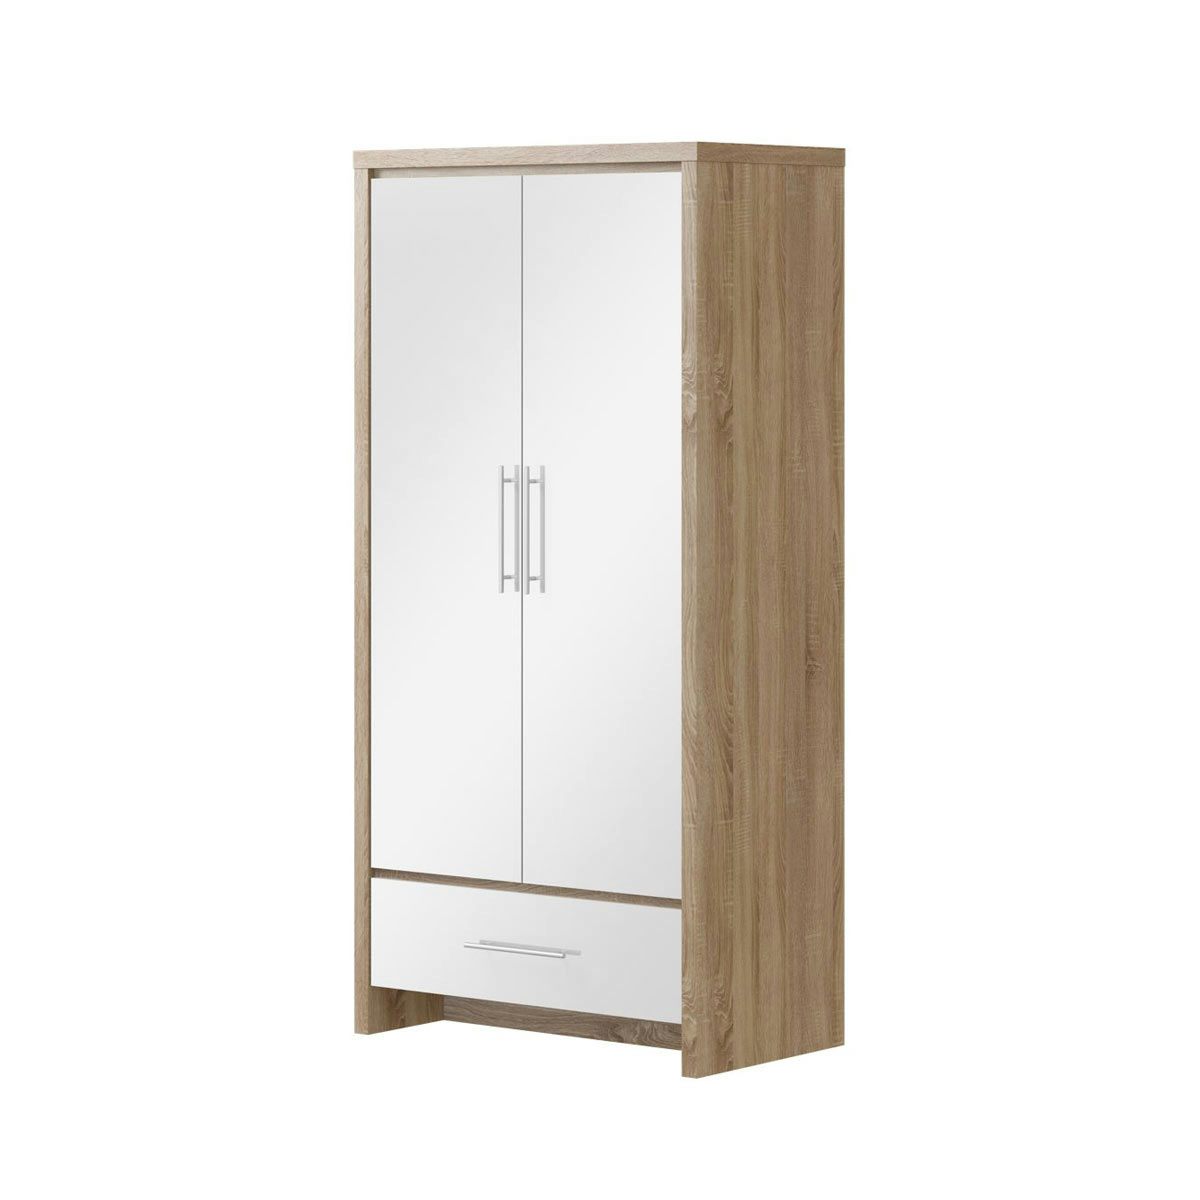 MFI London oak and white gloss 2 door, 1 drawer wardrobe ...